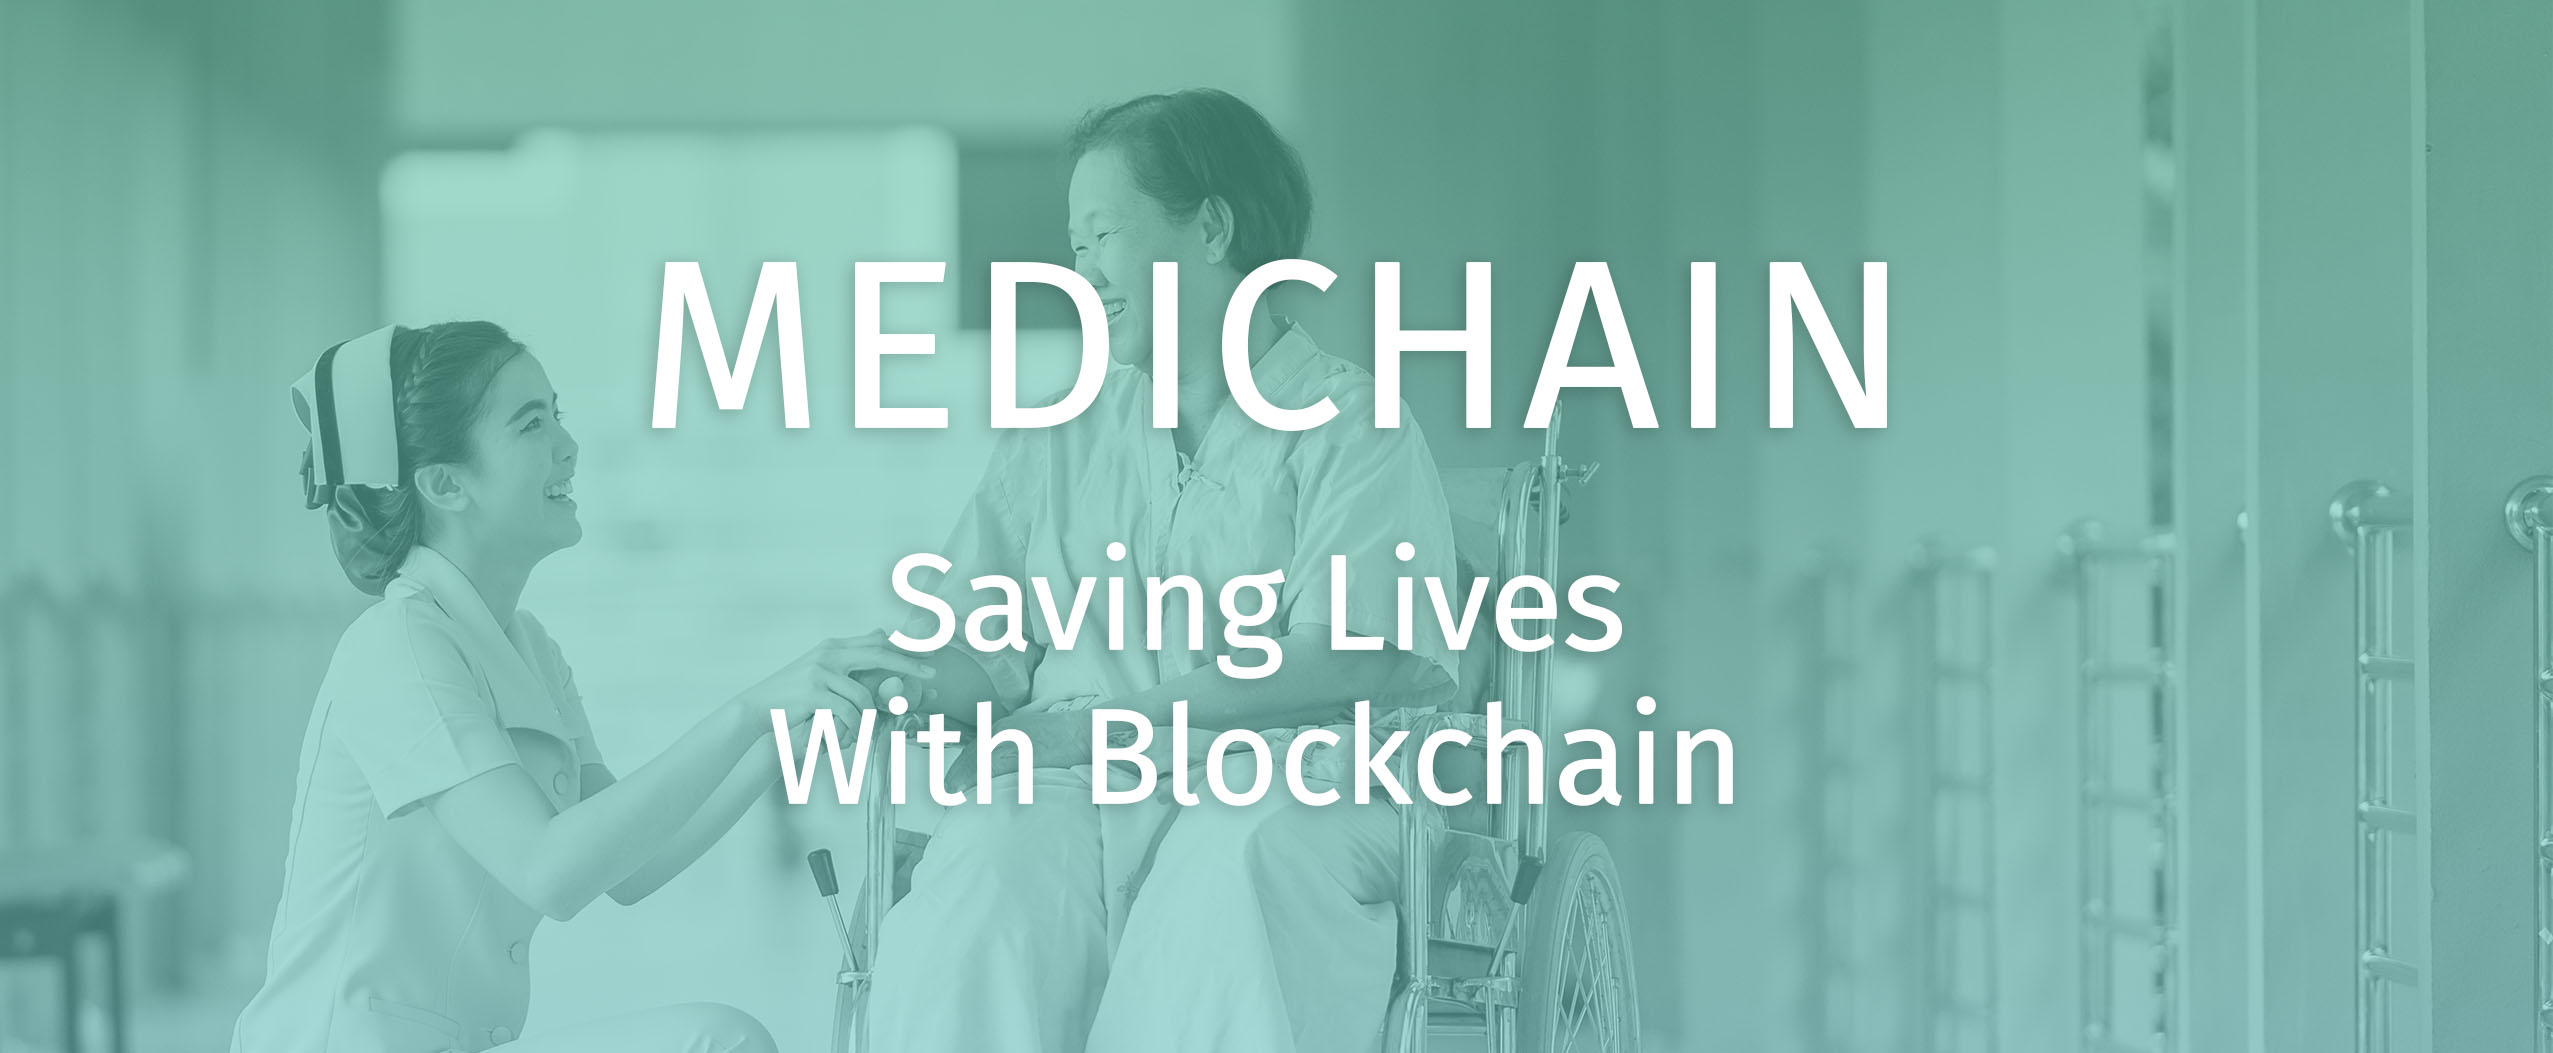 MediChain - Saving Lives With Blockchain 11